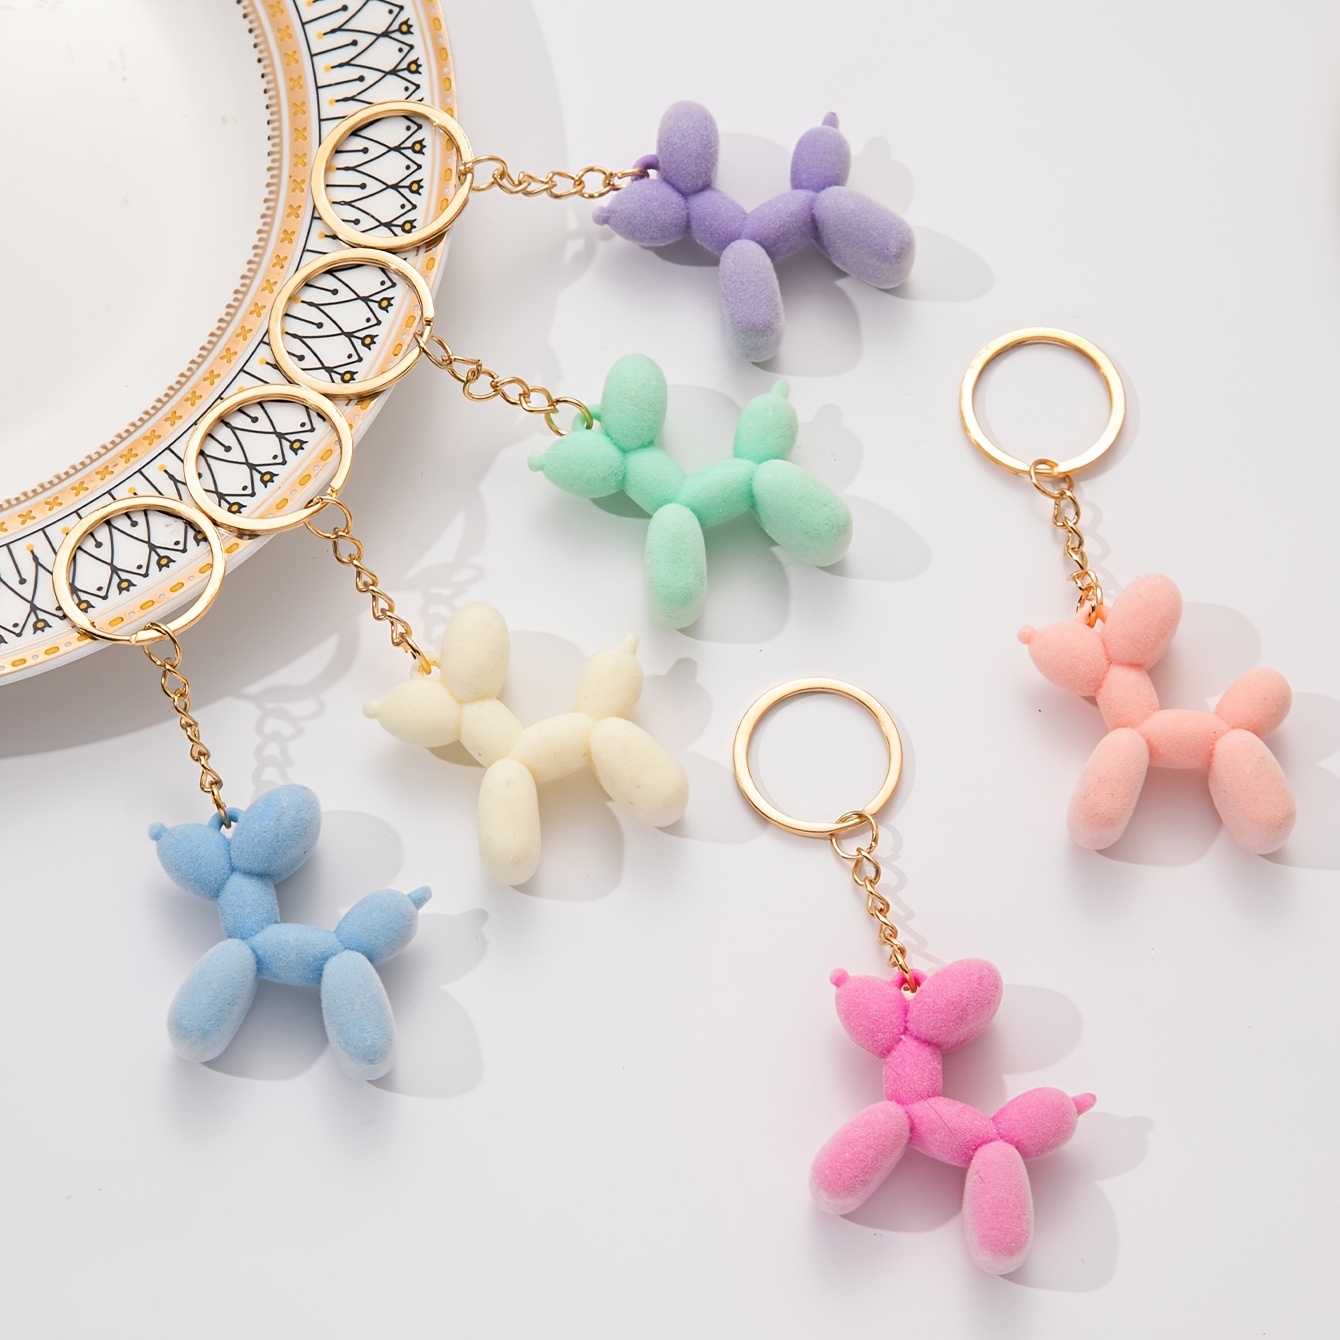 Handmade Poodle Bag Charm Ornament Pendant Clip Dog Keychain 